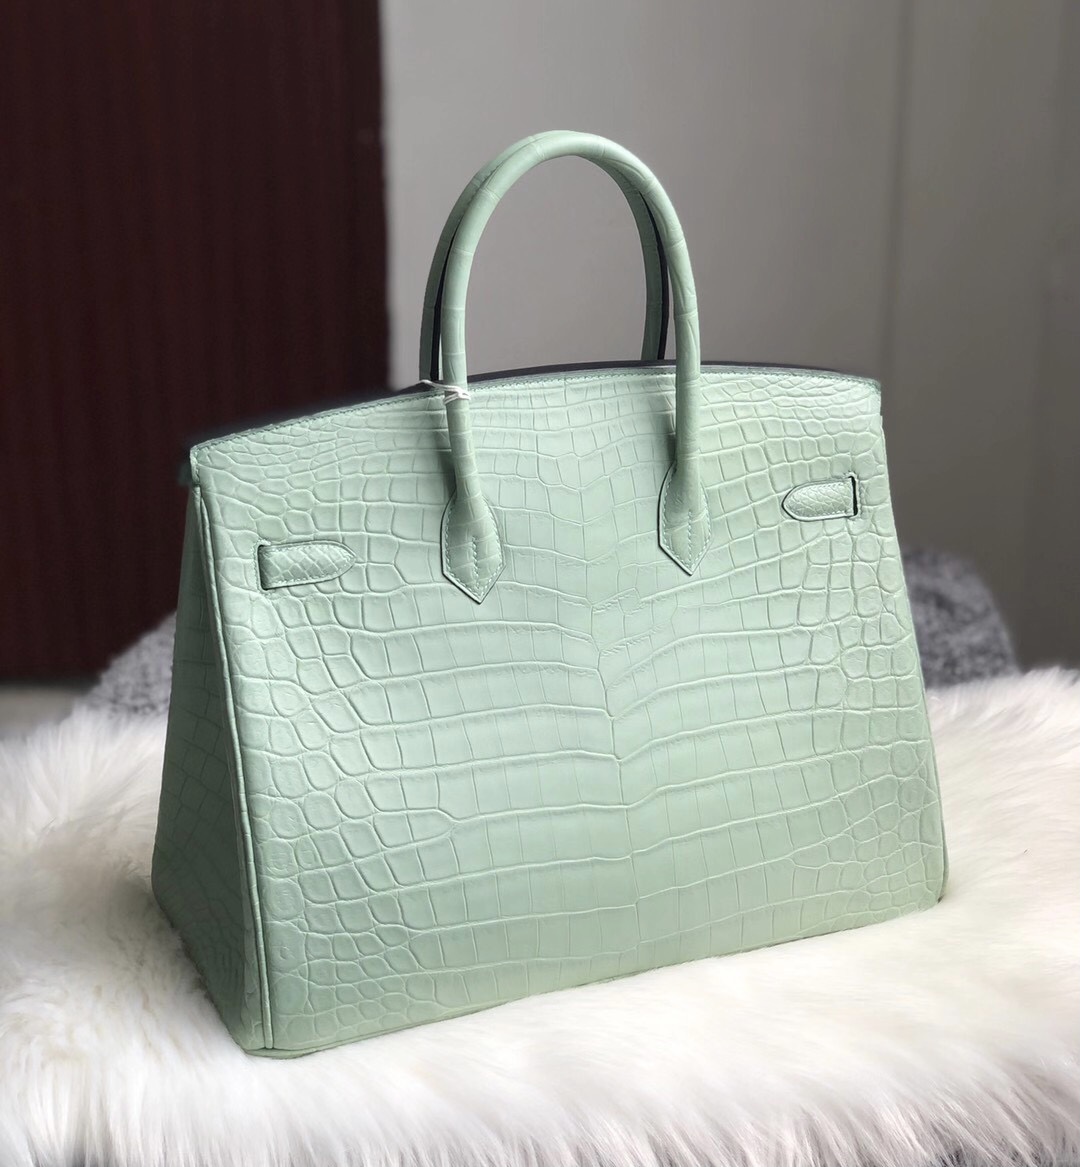 Hermes Birkin 35cm Handbag CK6U Peppermint Green 水綠色 薄荷綠